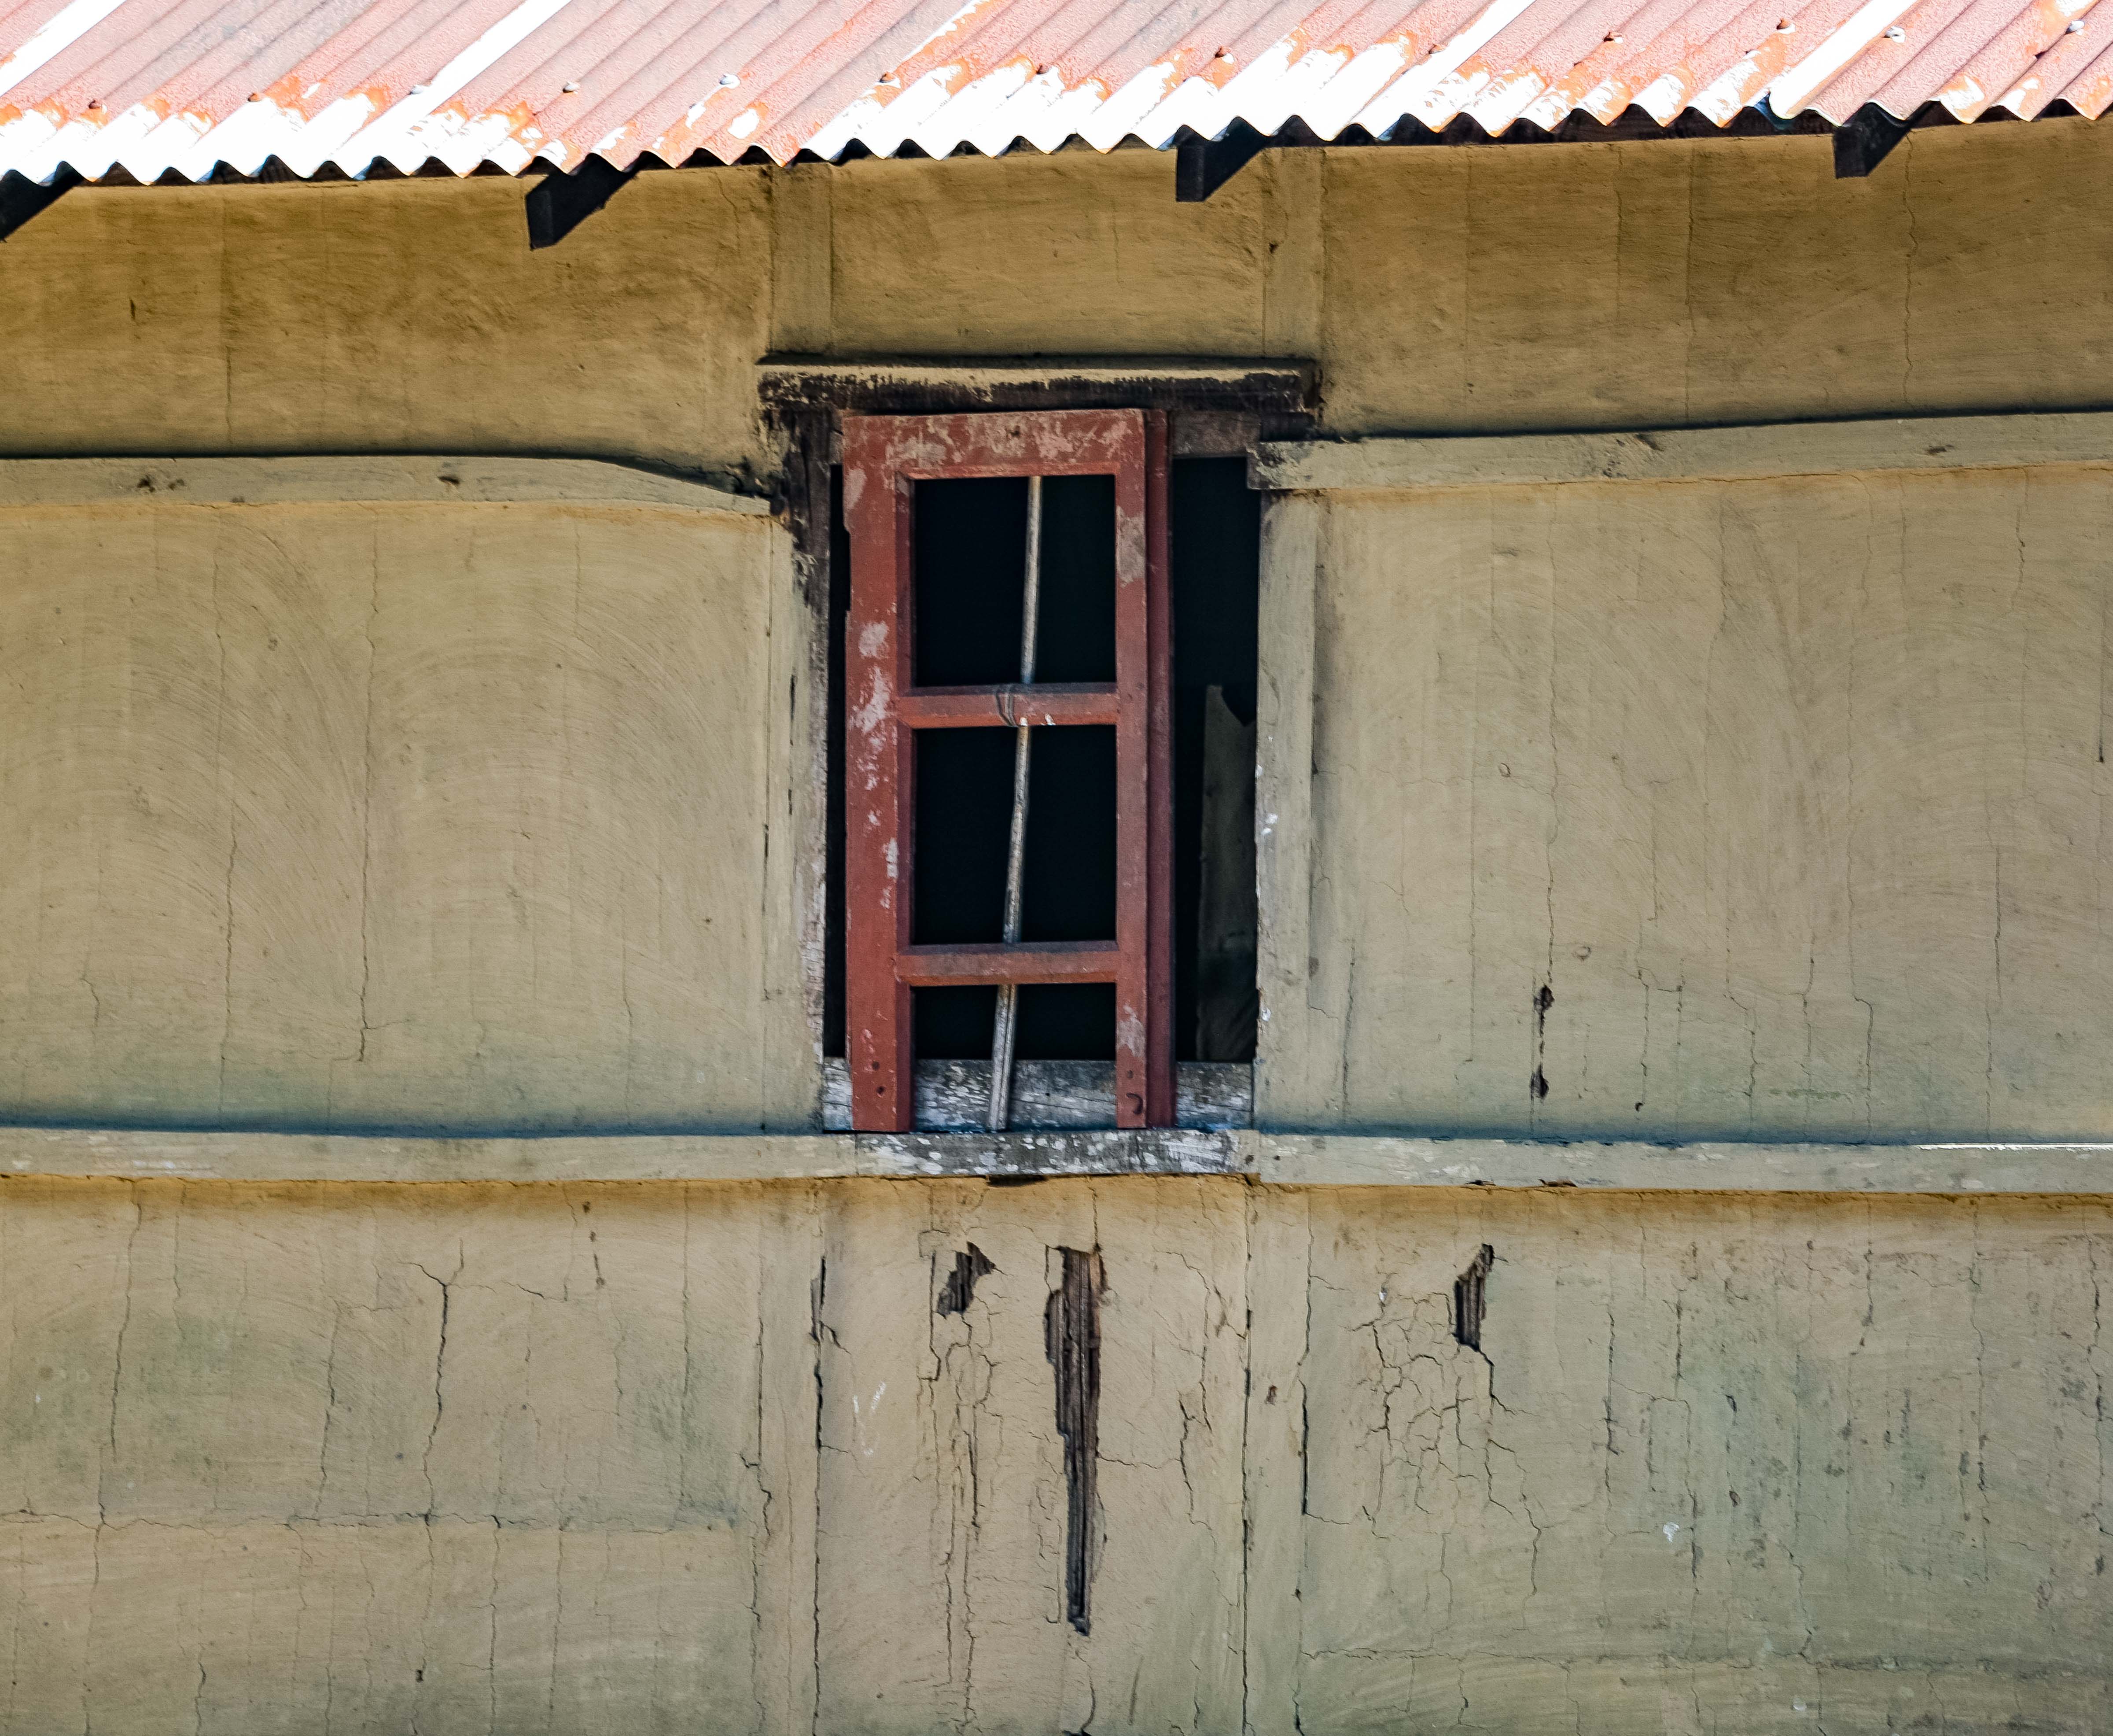 Bangladesh, Sylhet Prov, Window Detail, 2009, IMG 8205